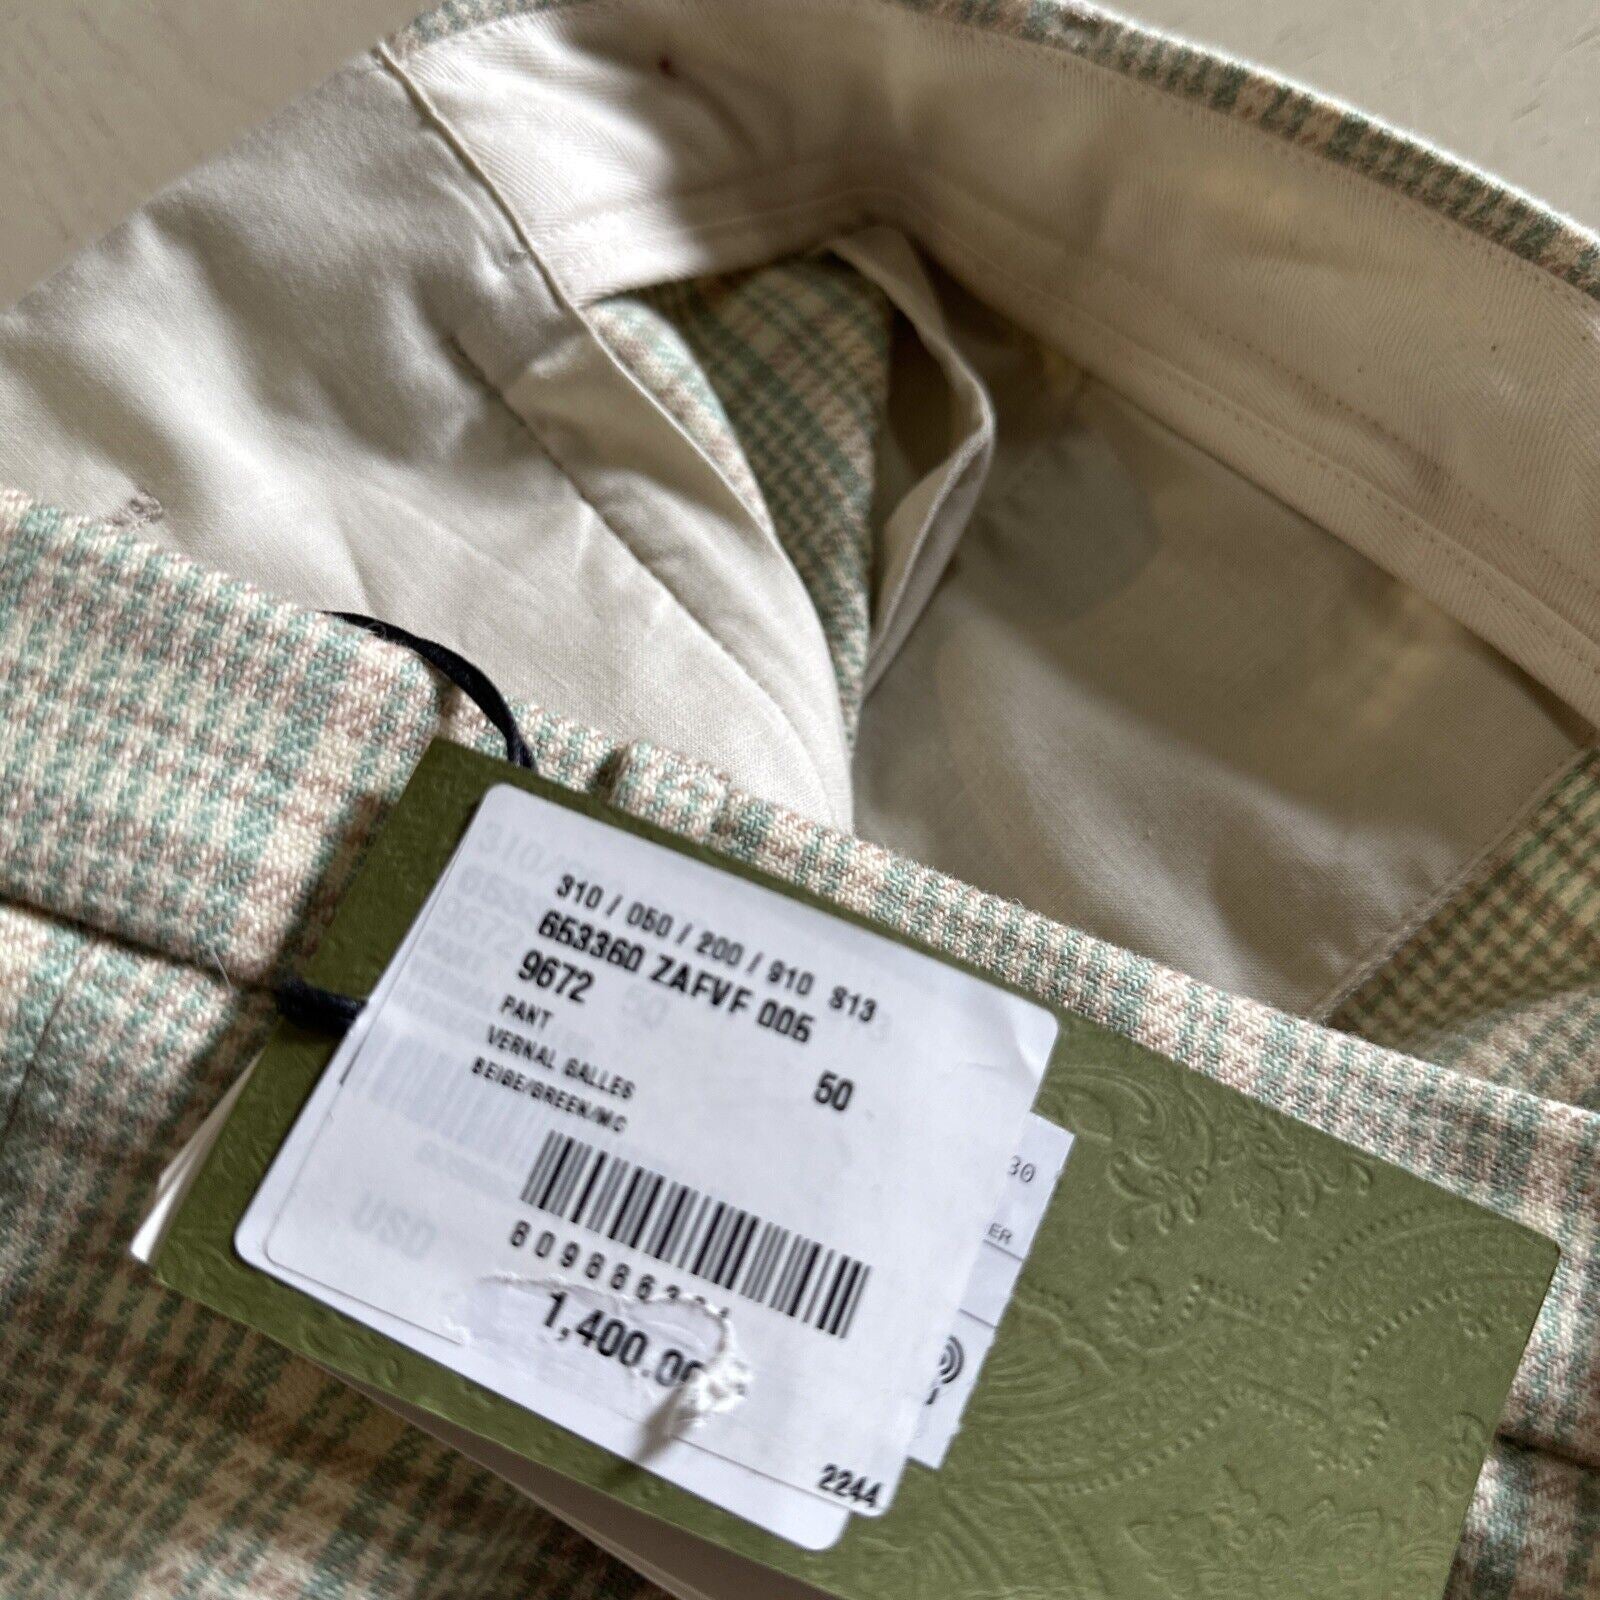 СЗТ $1400 Мужские классические брюки Gucci зеленый/бежевый 34 США (50 ЕС) Италия